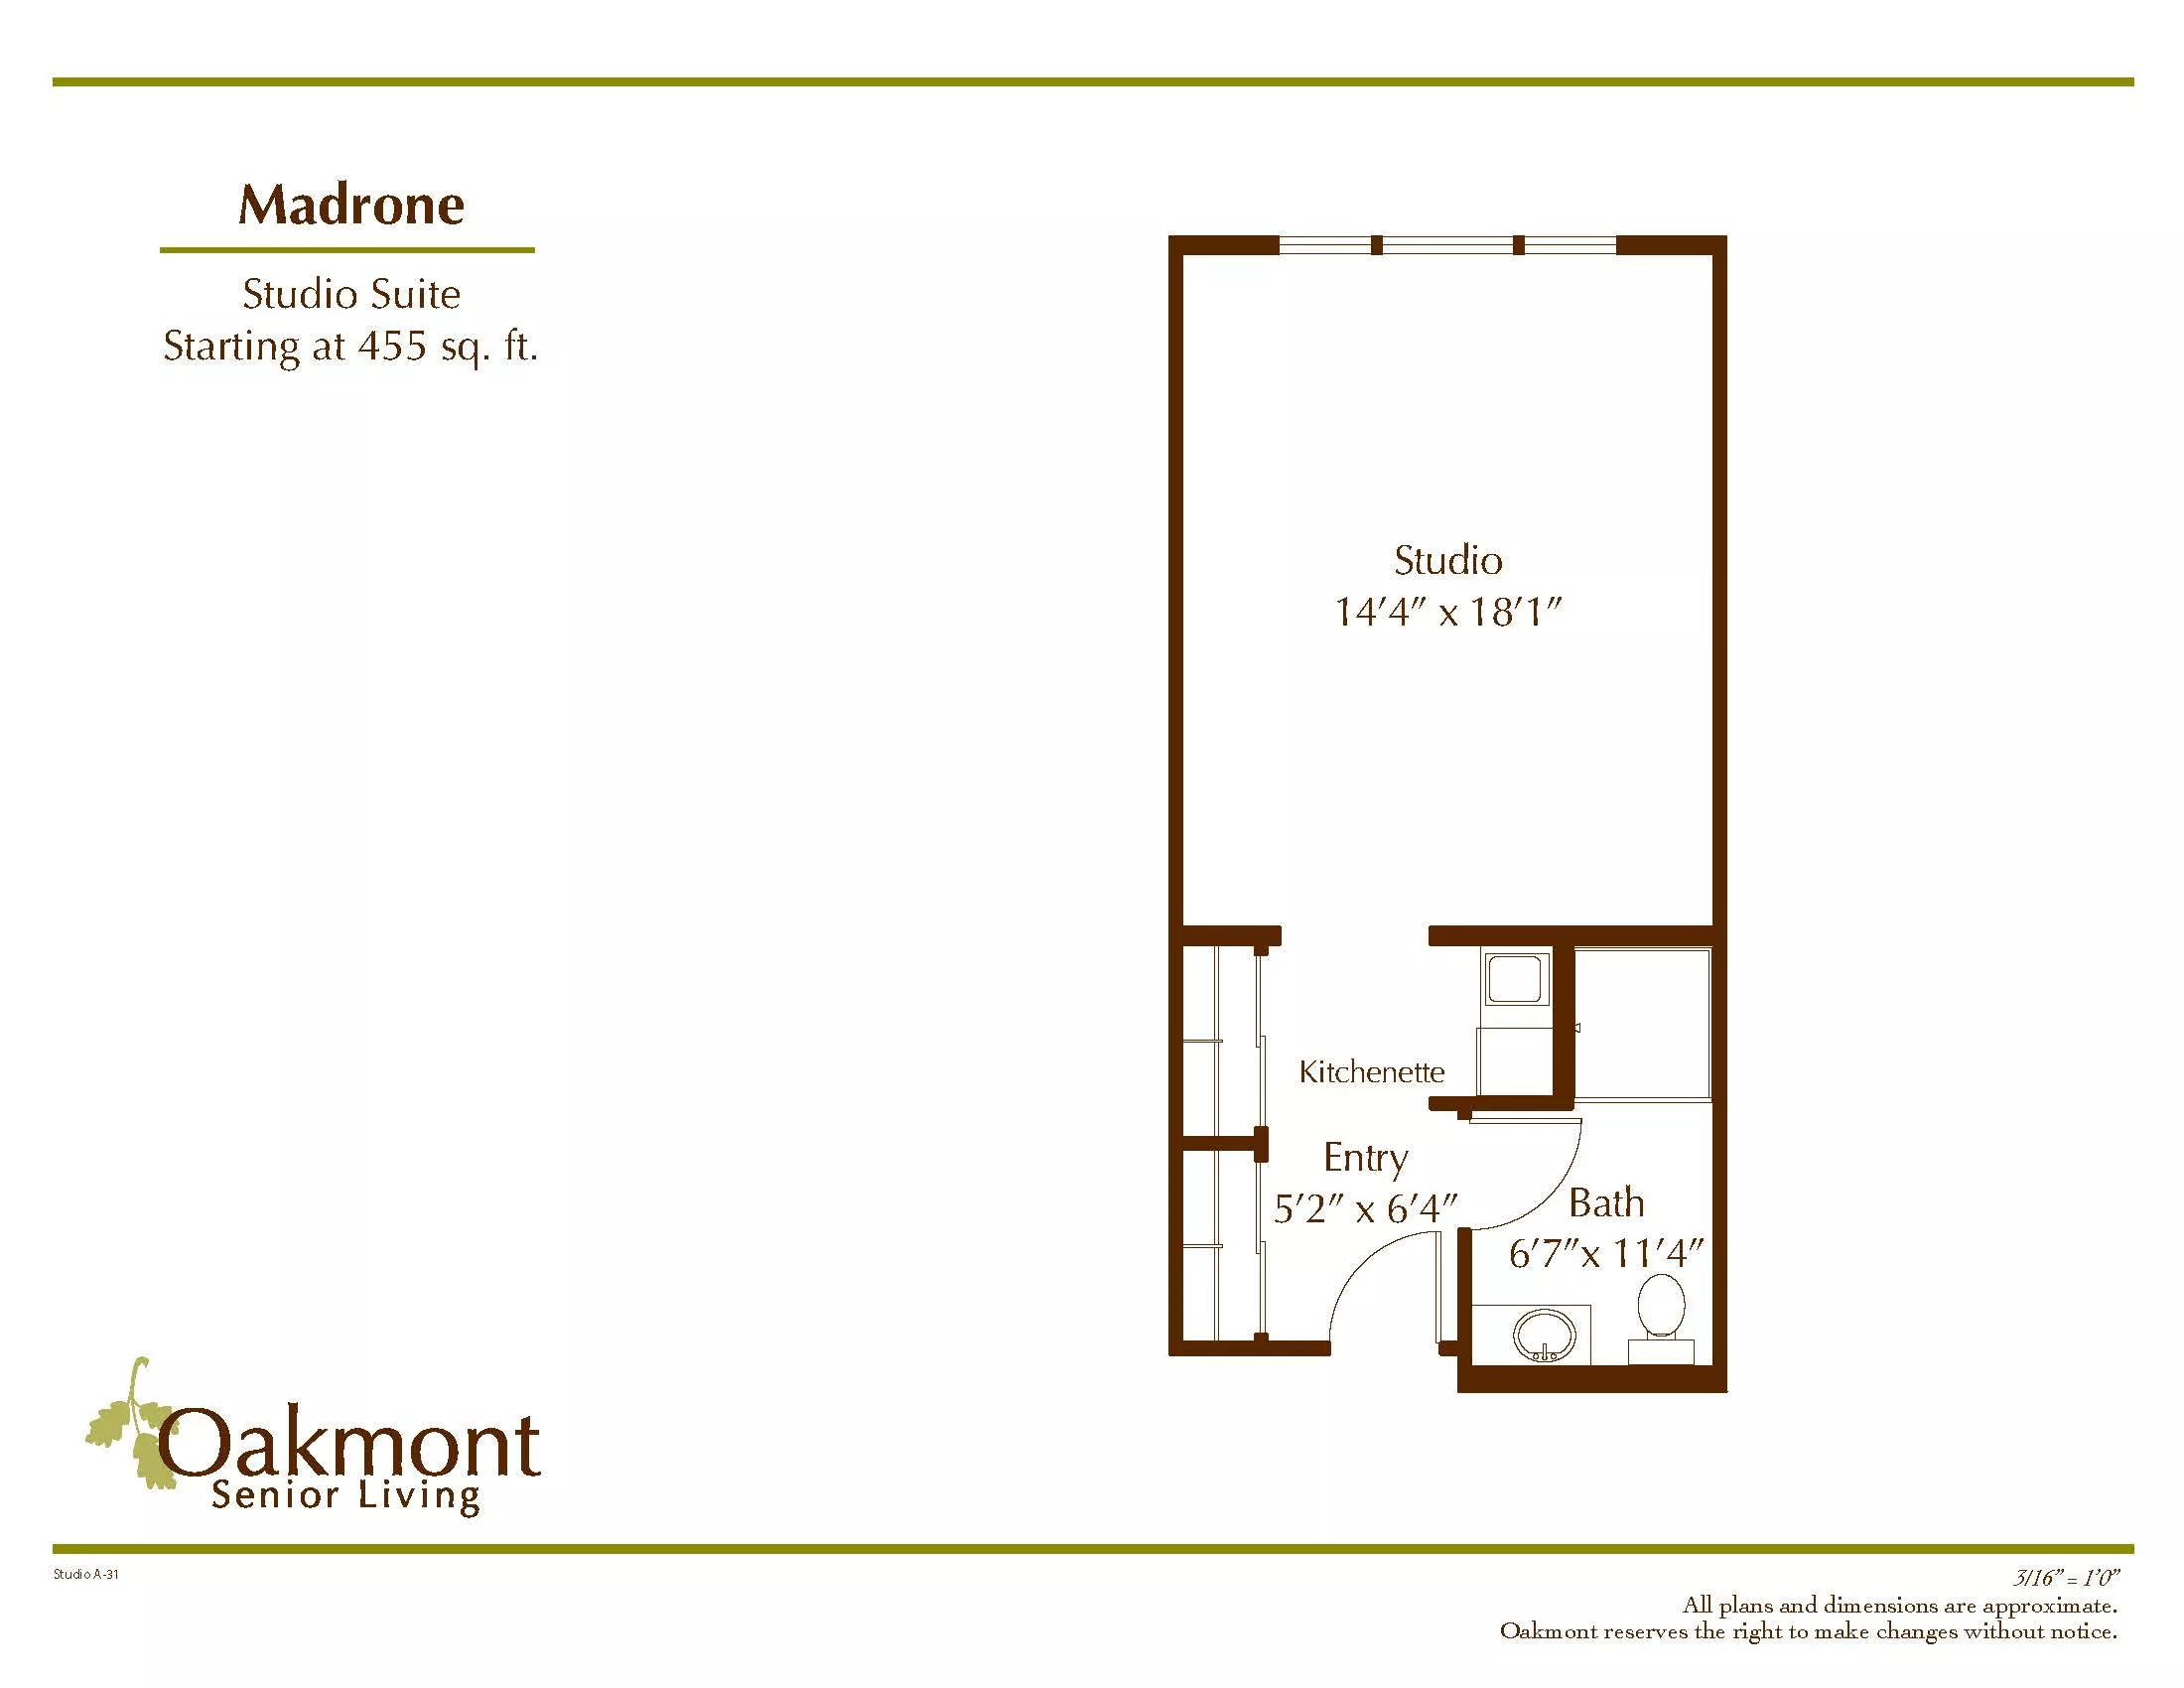 Madrone floor plan